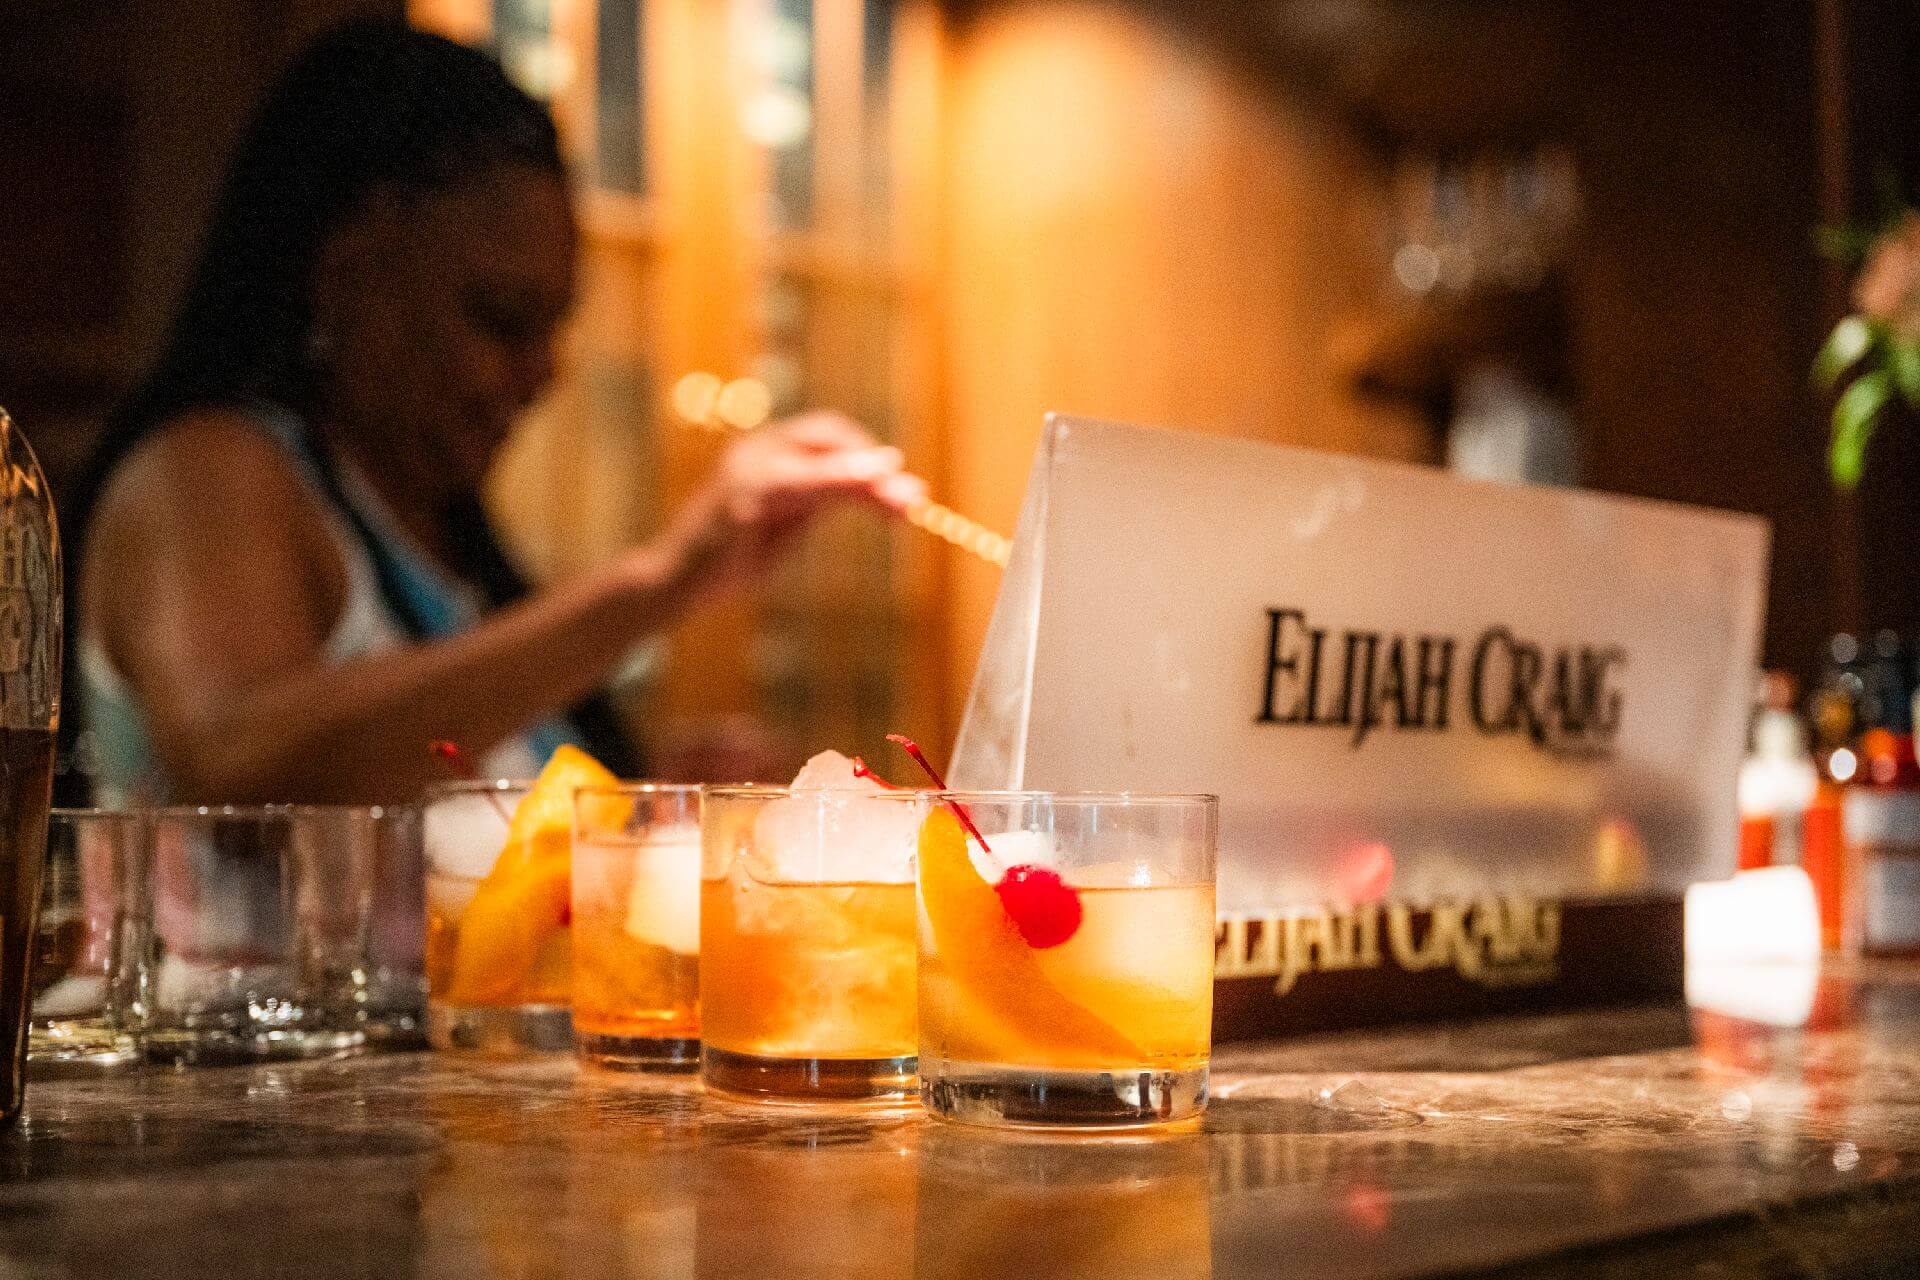 Lynn House making Old Fashioned cocktails for Elijah Craig